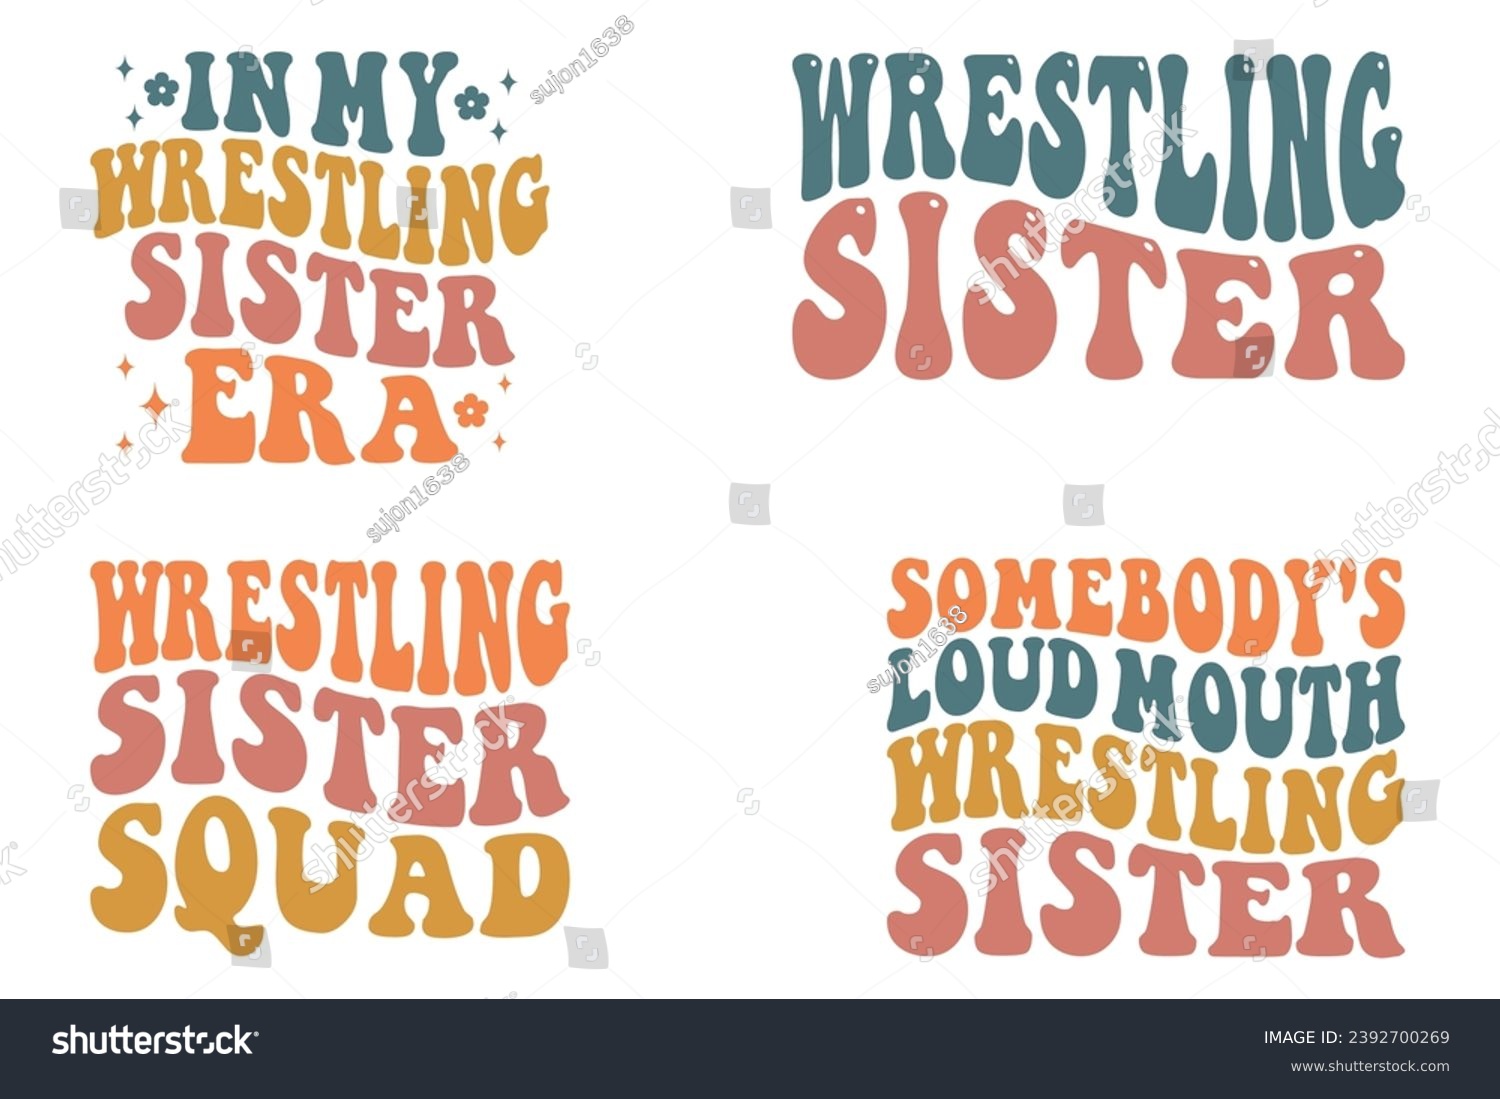 SVG of In My Wrestling sister Era, Wrestling sister, Wrestling sister Squad, Somebody's Loud Mouth Wrestling sister retro wavy T-shirt designs svg